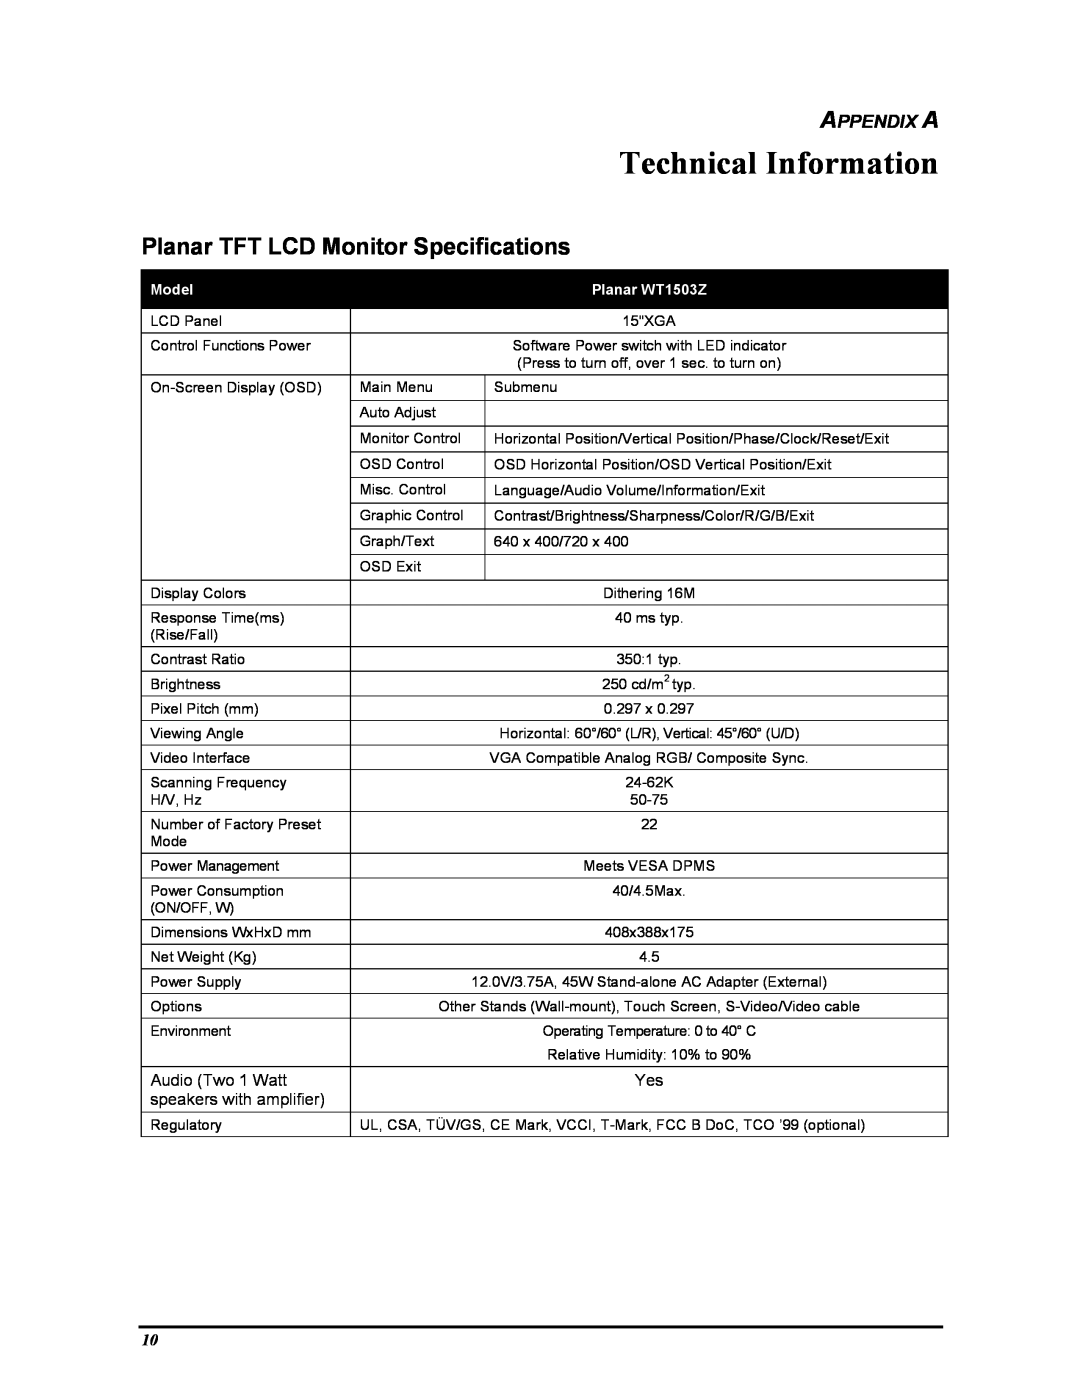 Planar FWT1503Z manual Technical Information, Planar TFT LCD Monitor Specifications, Appendix A, Model, Planar WT1503Z 